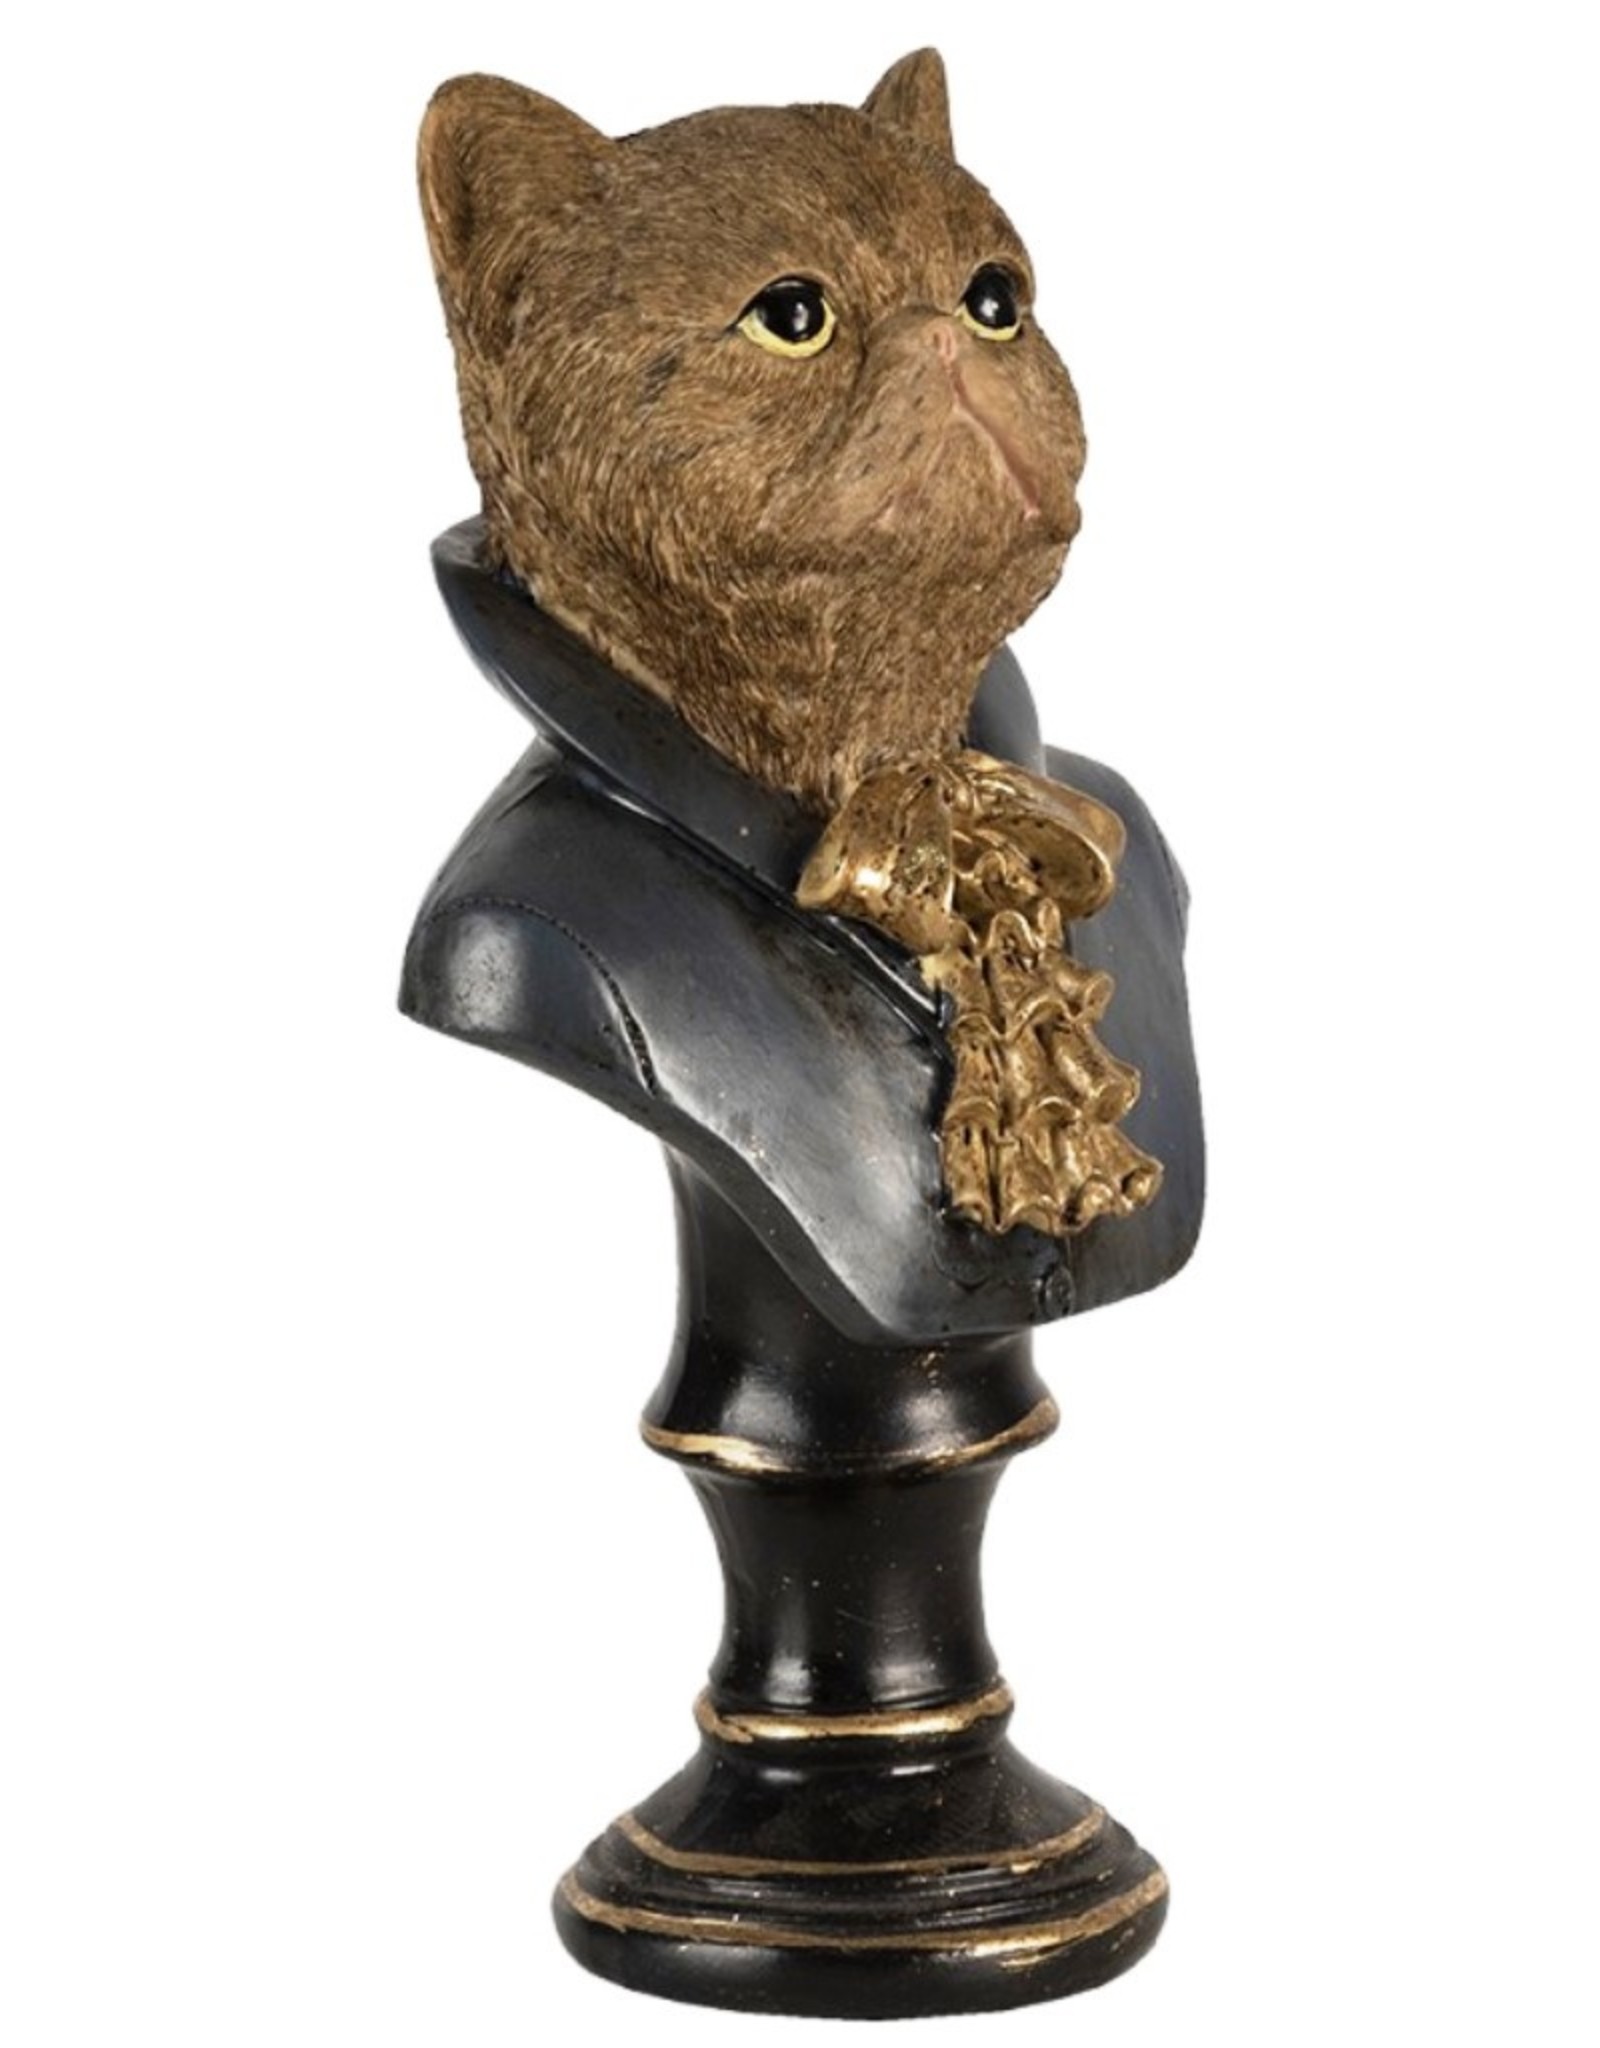 Trukado Giftware Figurines Collectables - Persian Cat Aristocrat bust 24cm